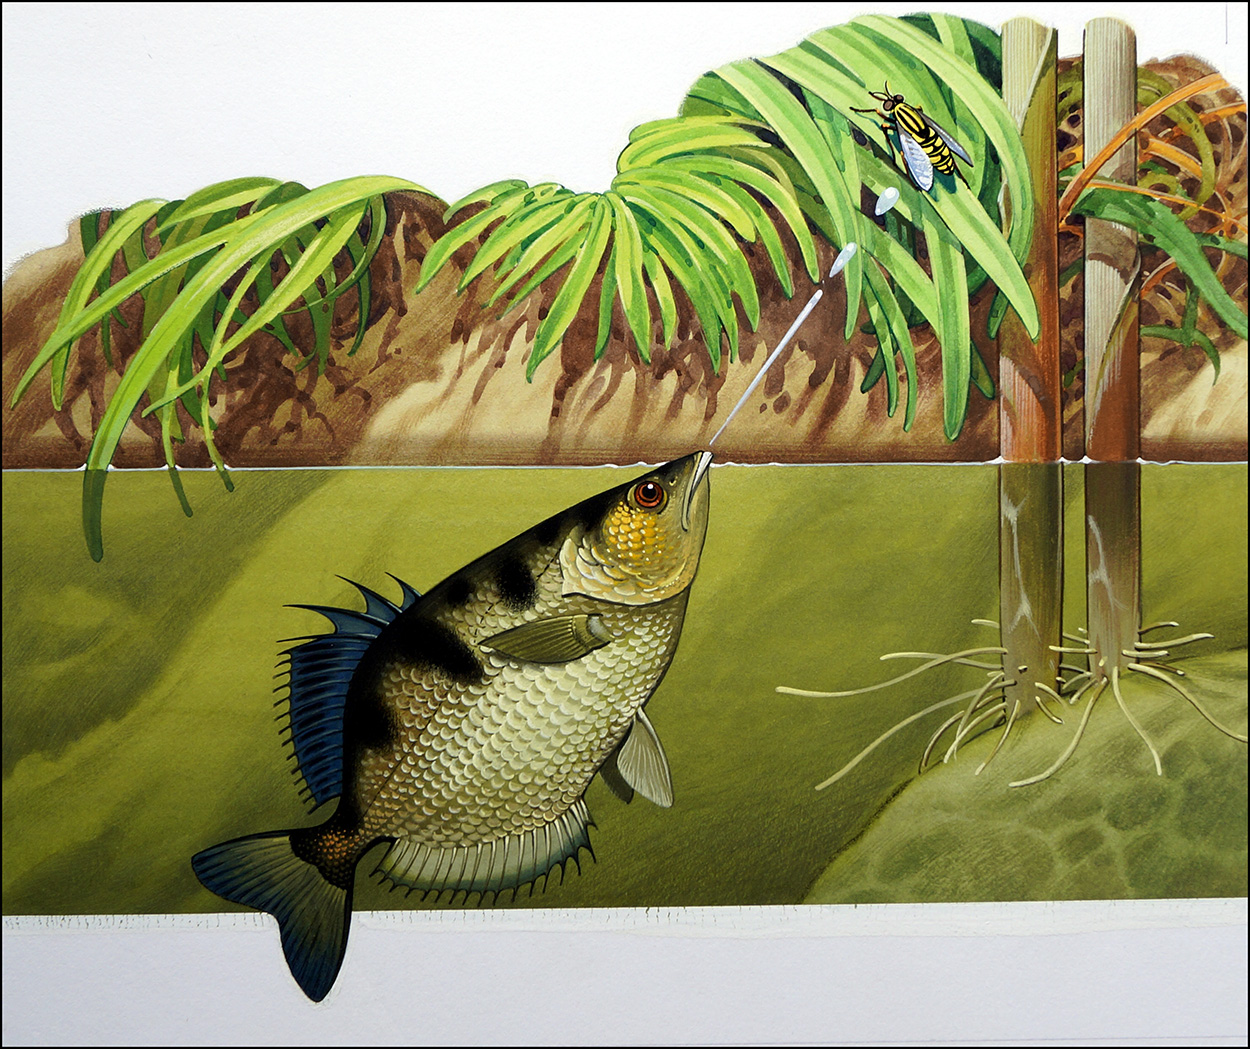 Archer Fish (Original) art by Bernard Long at The Illustration Art Gallery